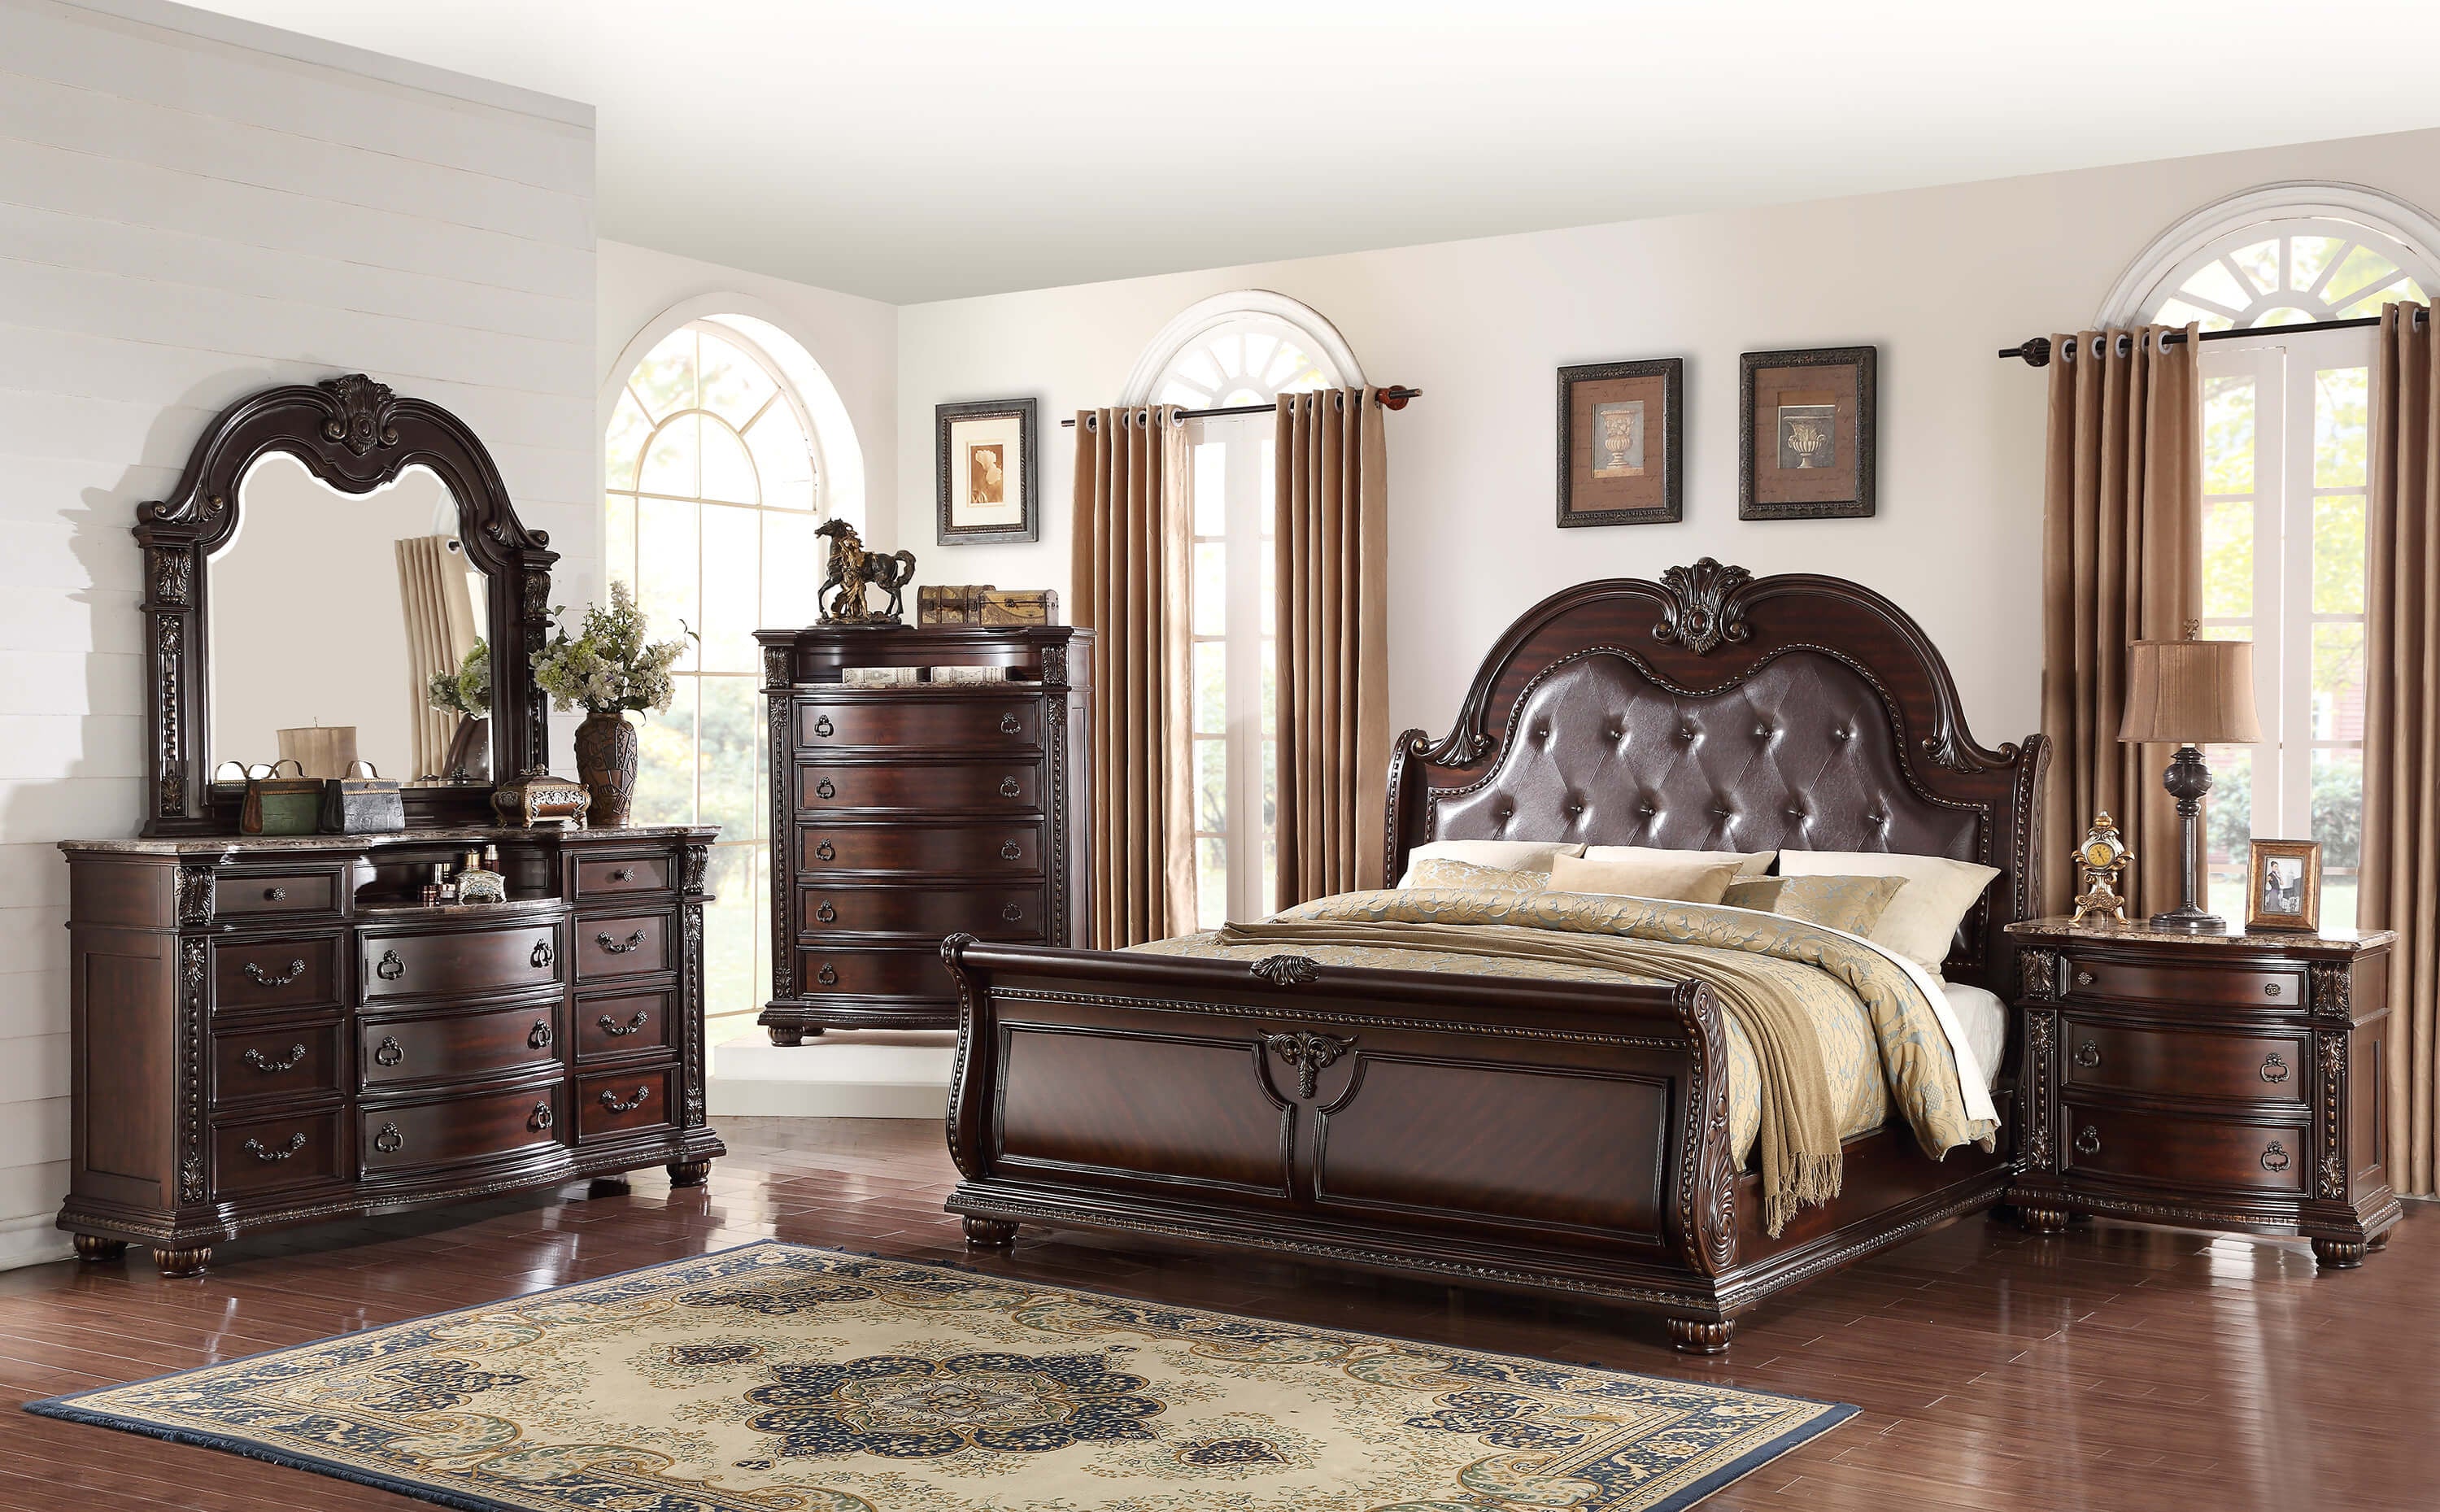 crown bedroom furniture macclesfield